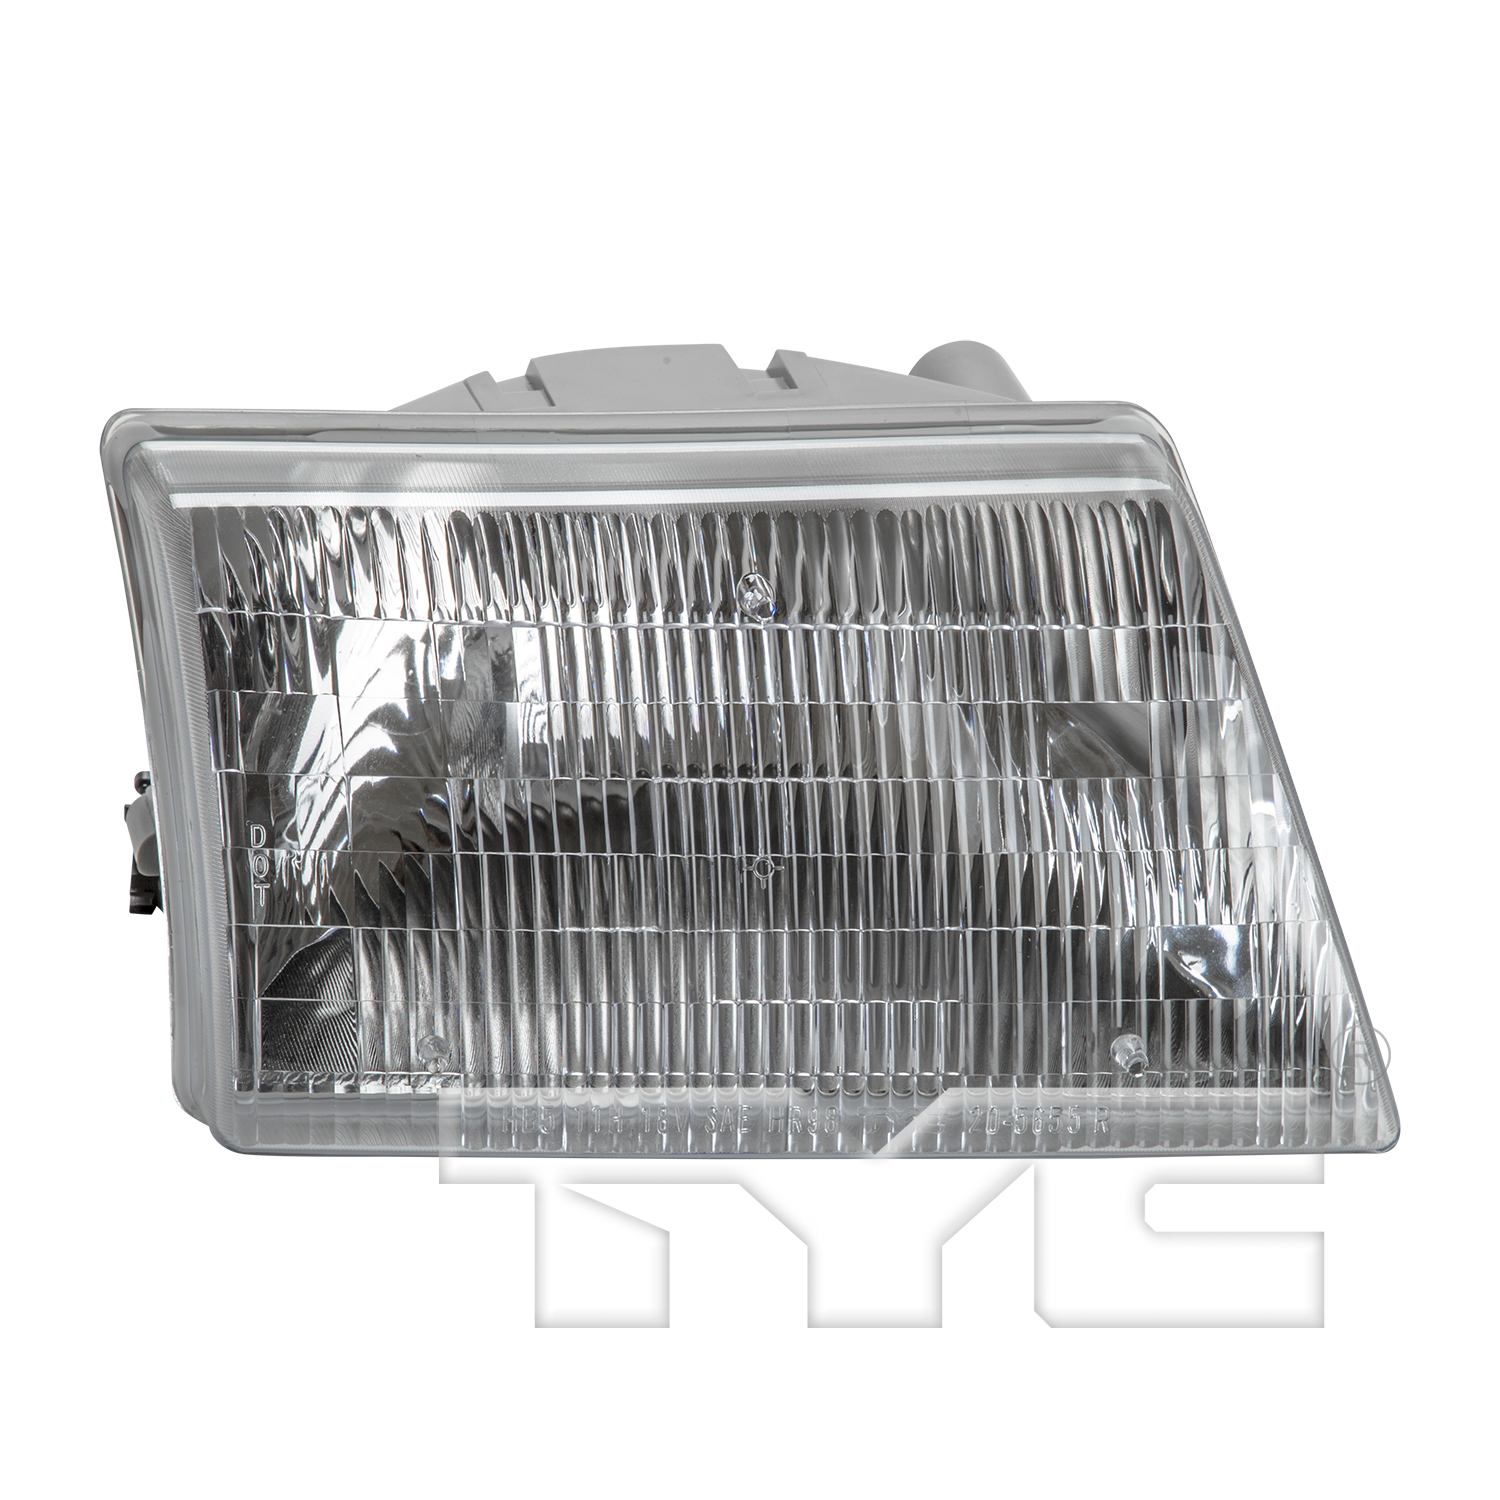 Aftermarket HEADLIGHTS for MAZDA - B2500, B2500,98-00,RT Headlamp assy composite